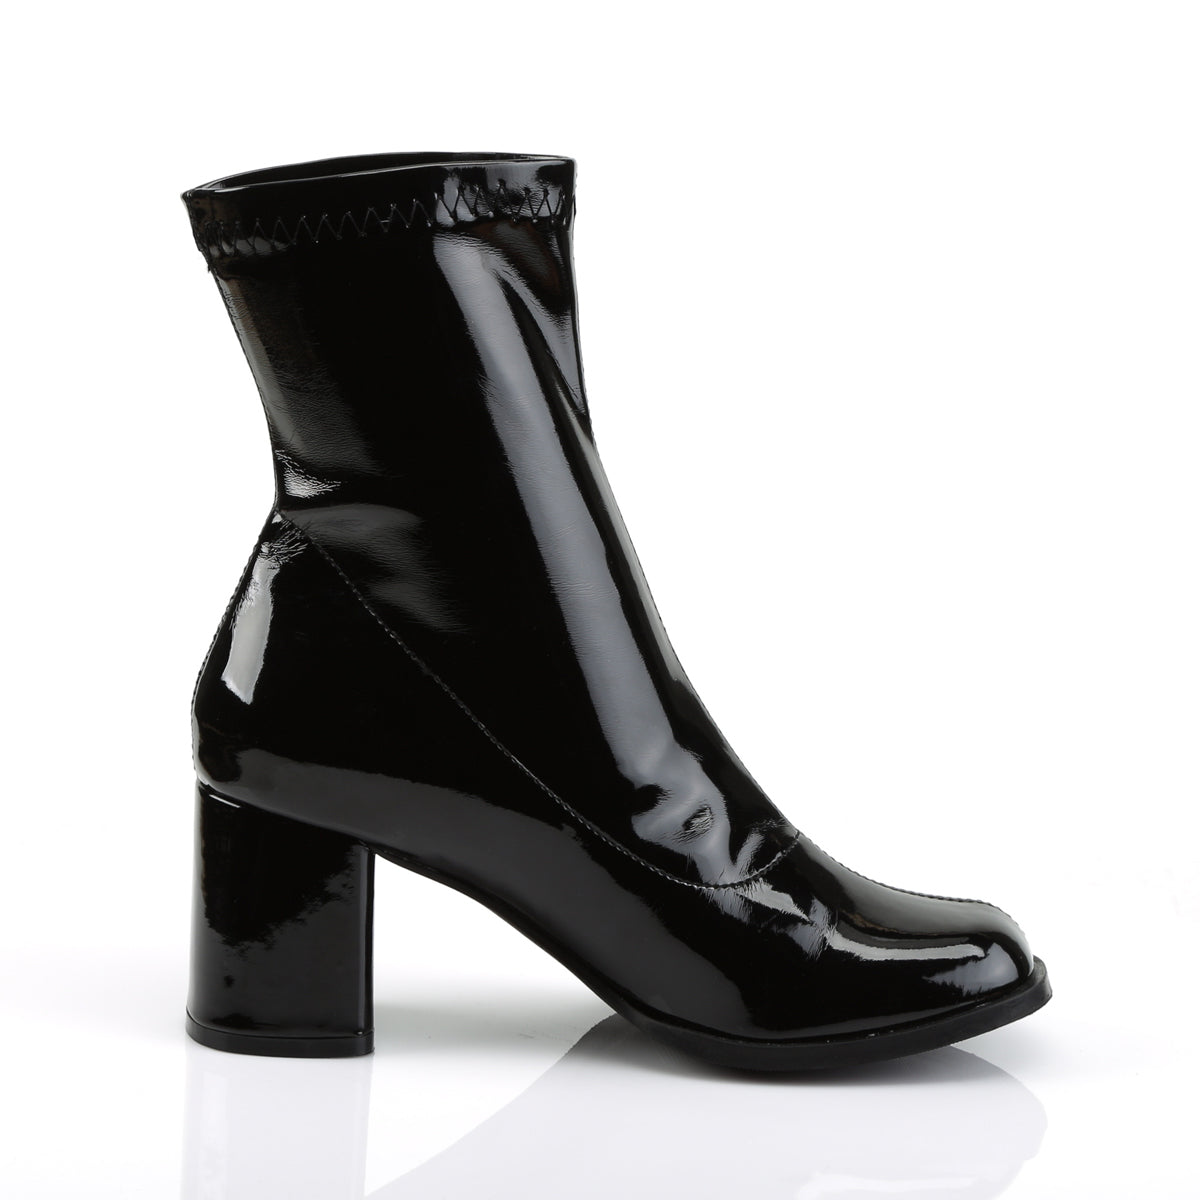 GOGO-150 3" Heel Black Stretch Women's Boots Funtasma Costume Shoes Fancy Dress